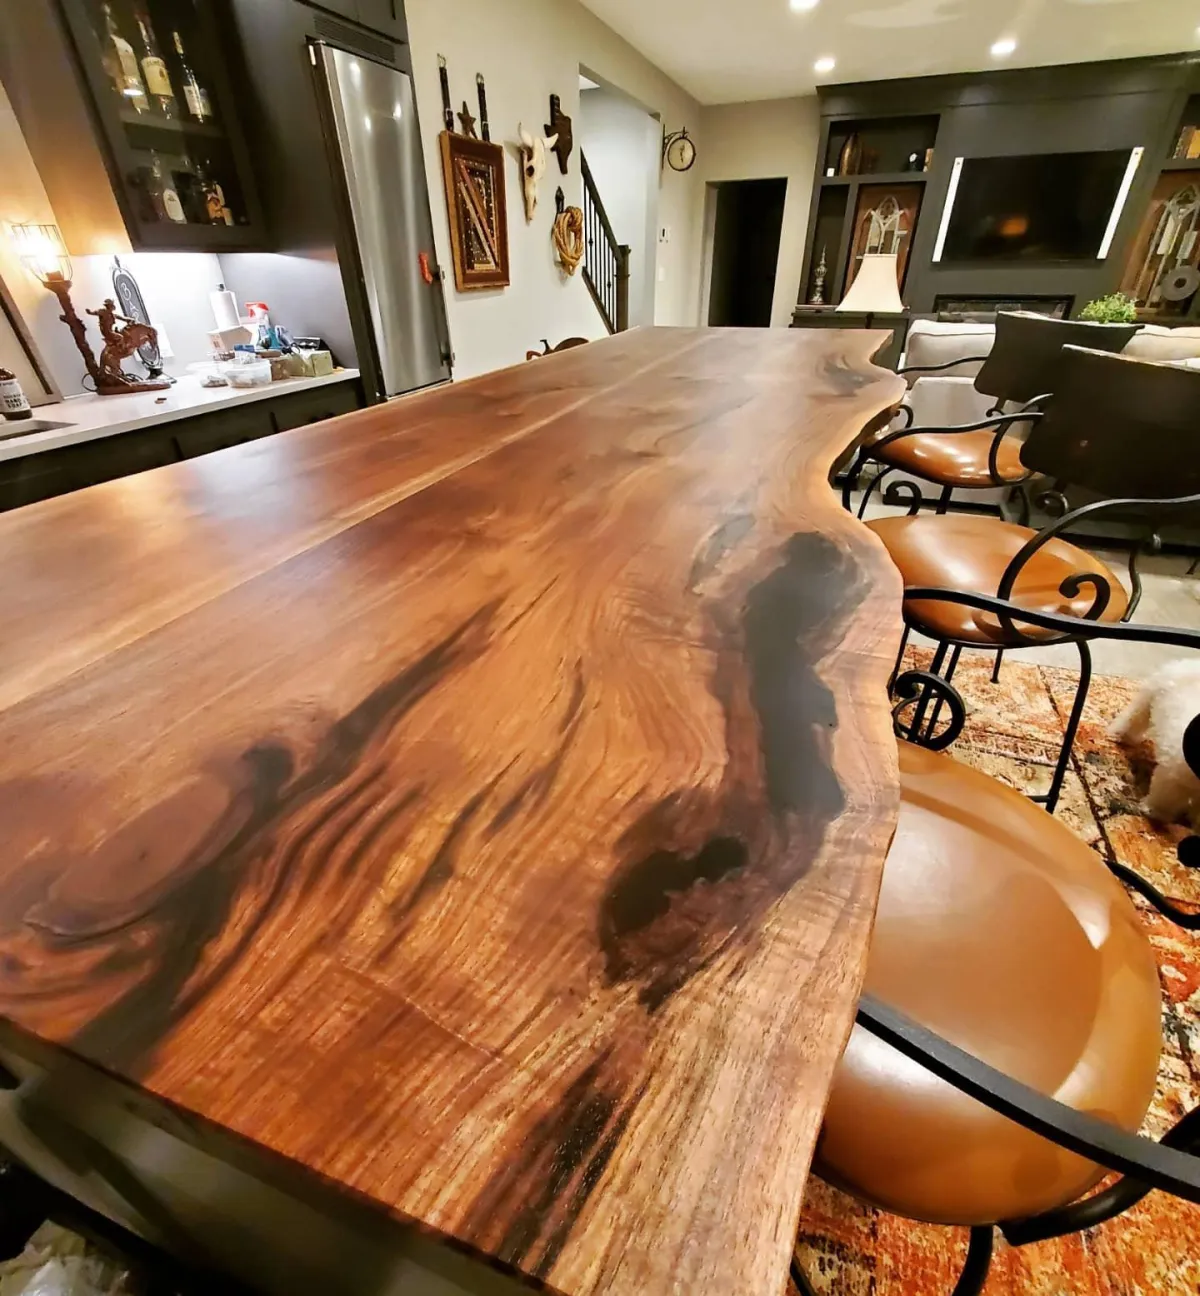 A custom table made by Matt Ruben of Hastings, MN